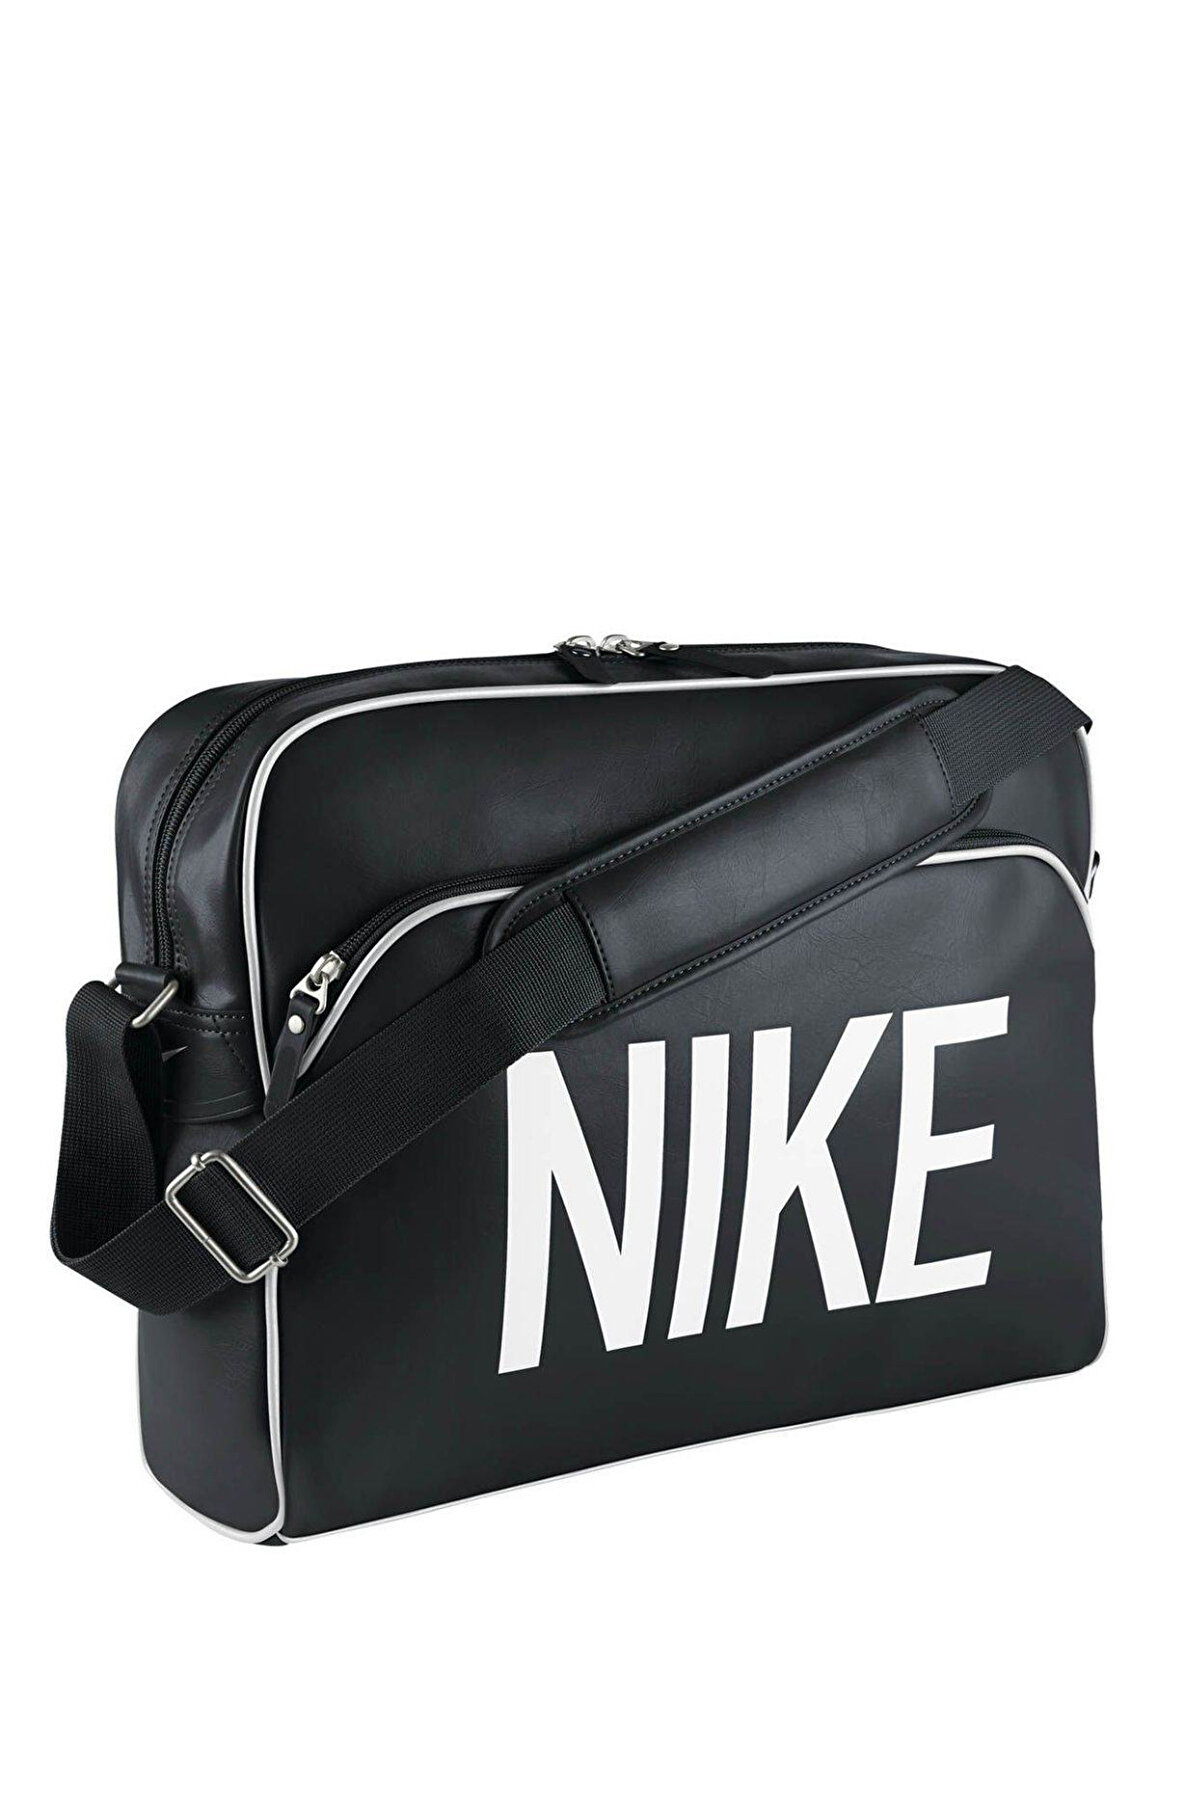 Nike Siyah Unisex Postacı Çanta 4358-SYH